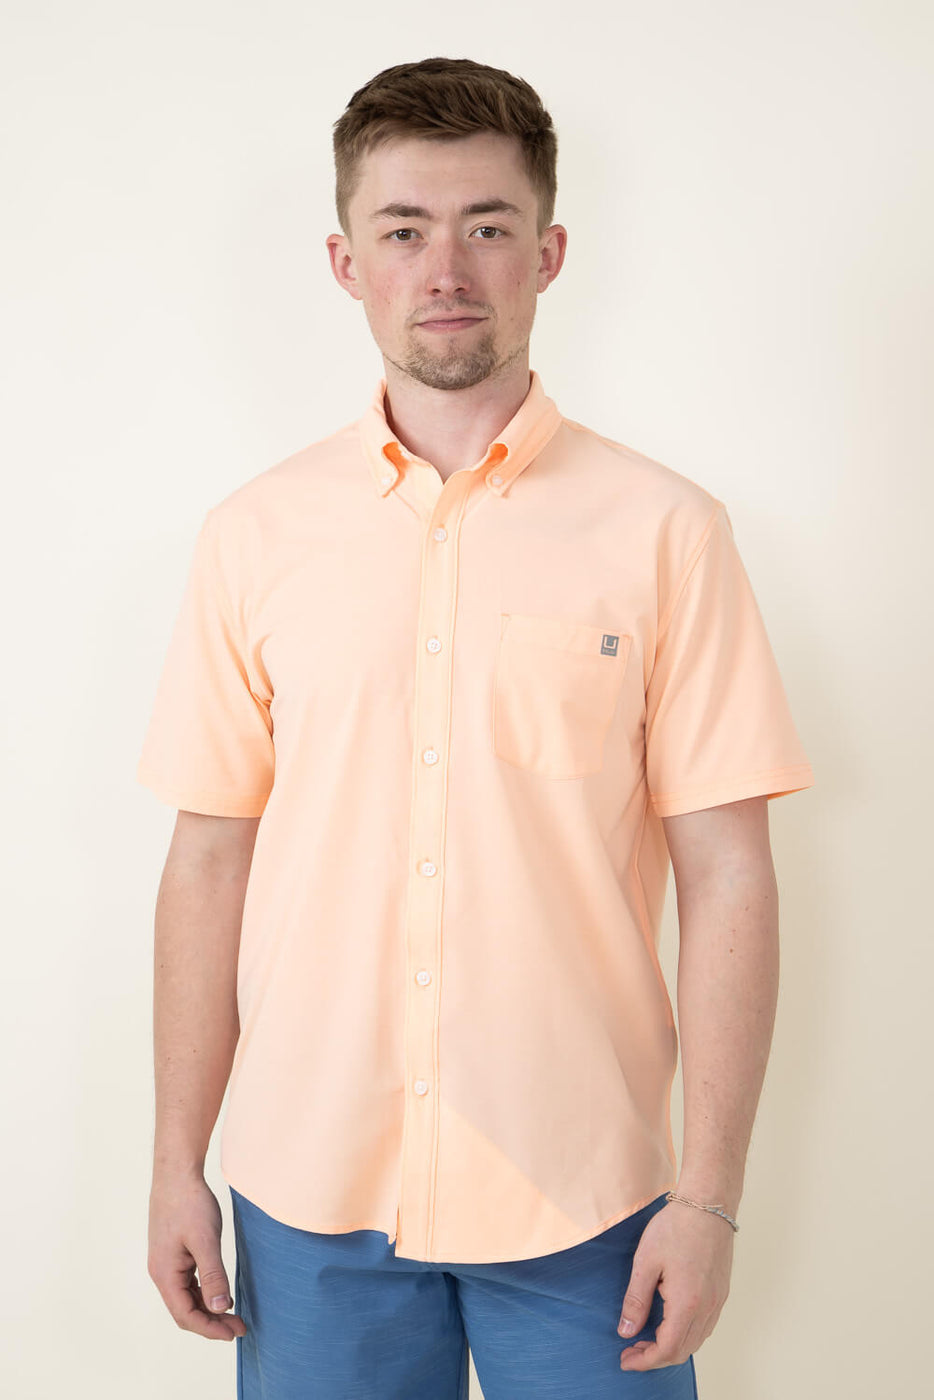 Huk Fishing Kona Button Down Shirt for Men in Orange